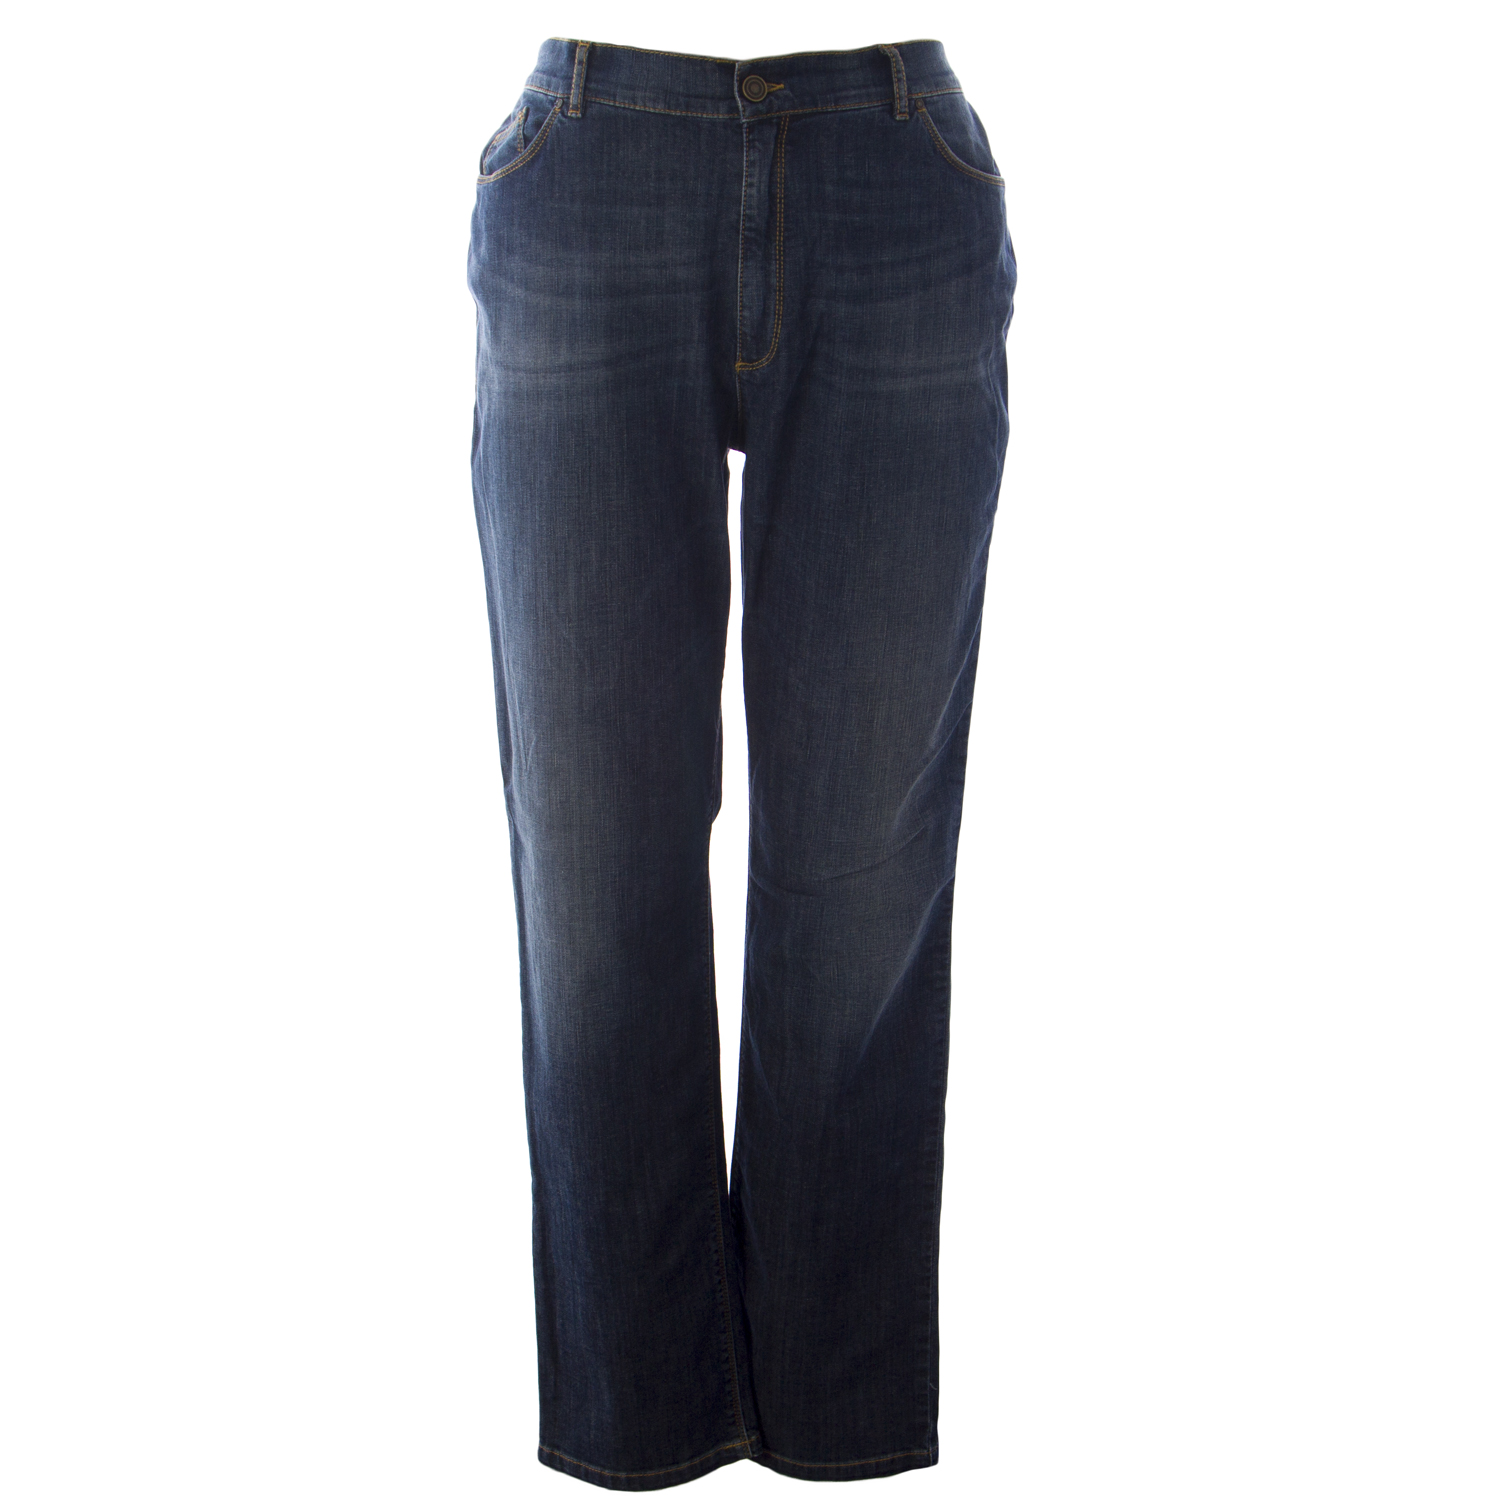 MARINA RINALDI Women's Medium Wash Idra Jeans $305 NWT | eBay